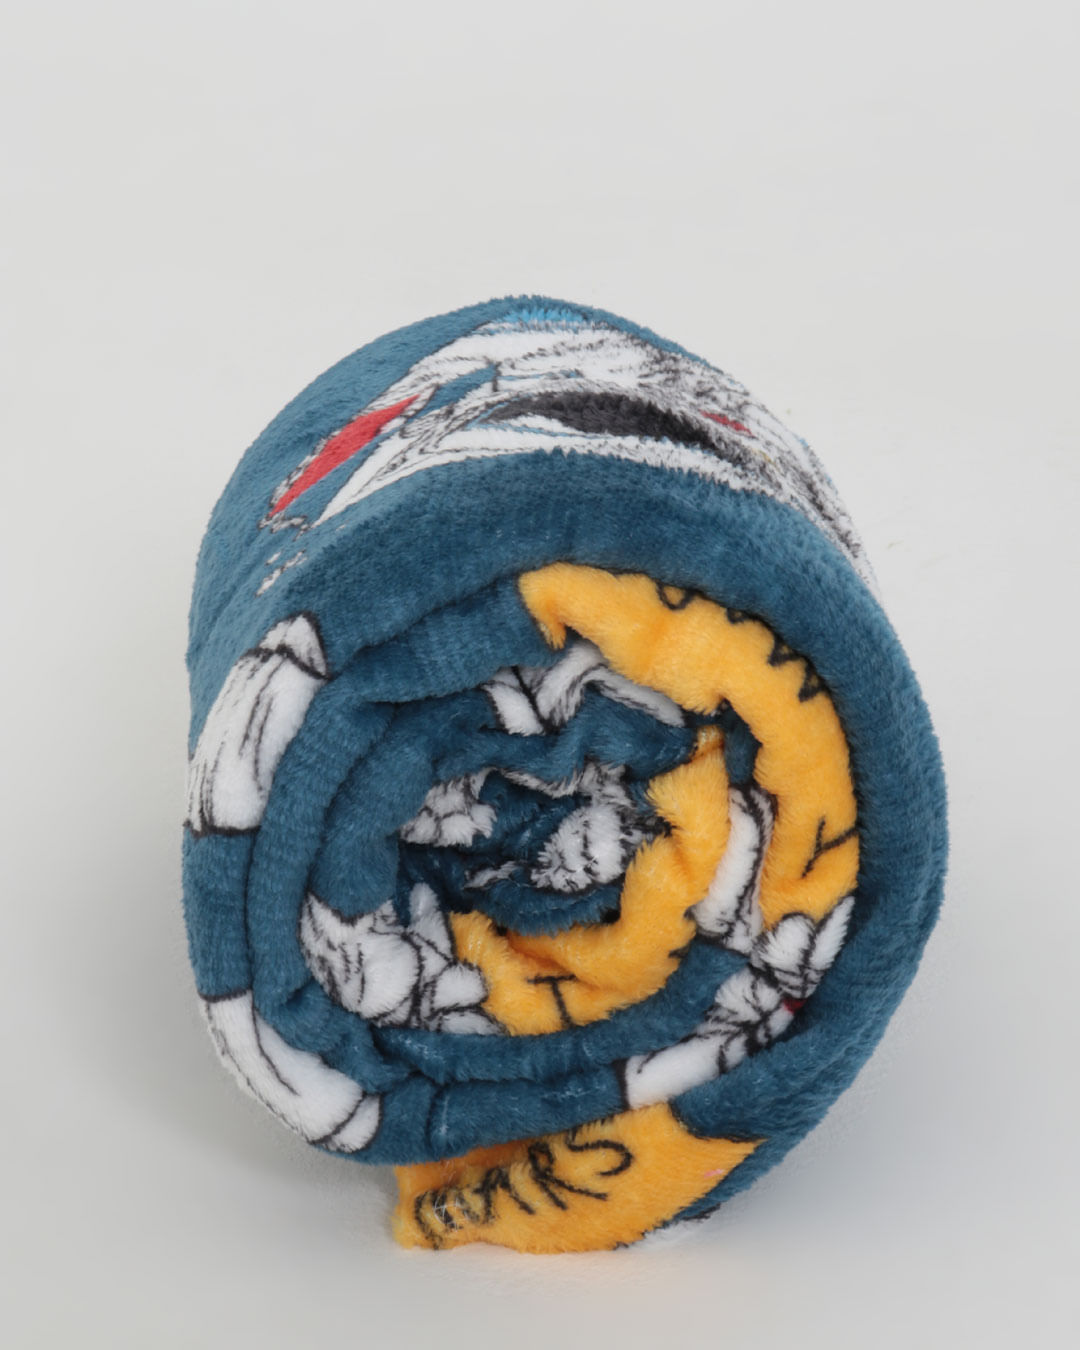 Cobertor-Solteiro-Infantil-Flannel-Astronautas-Azul